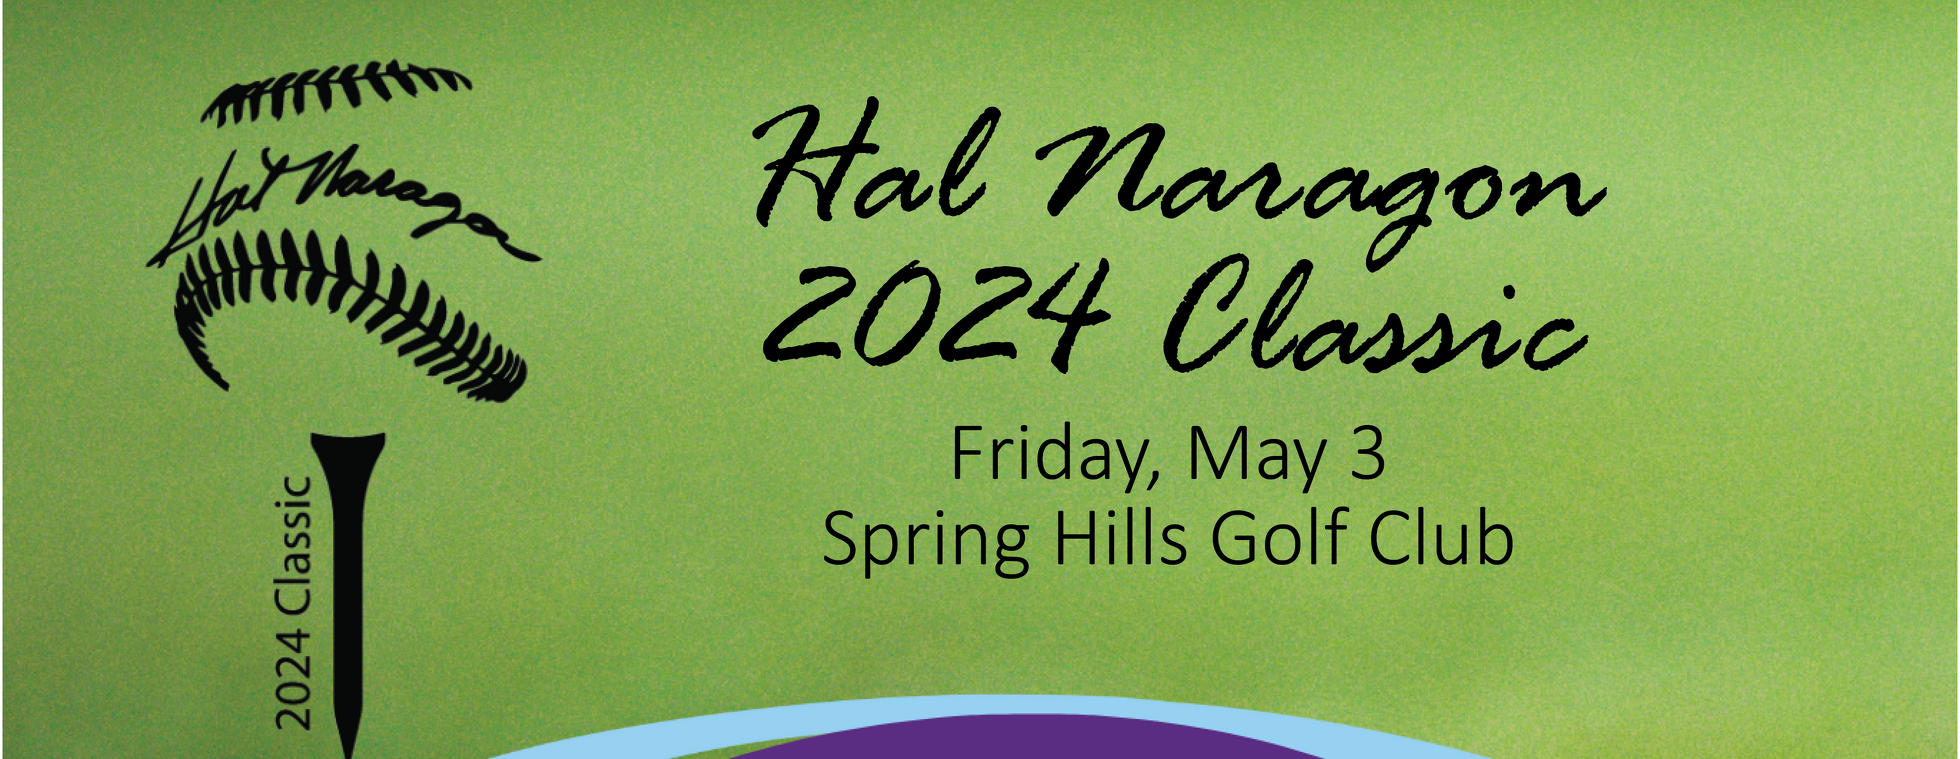 Hal Naragon Golf Classic at Spring Hills